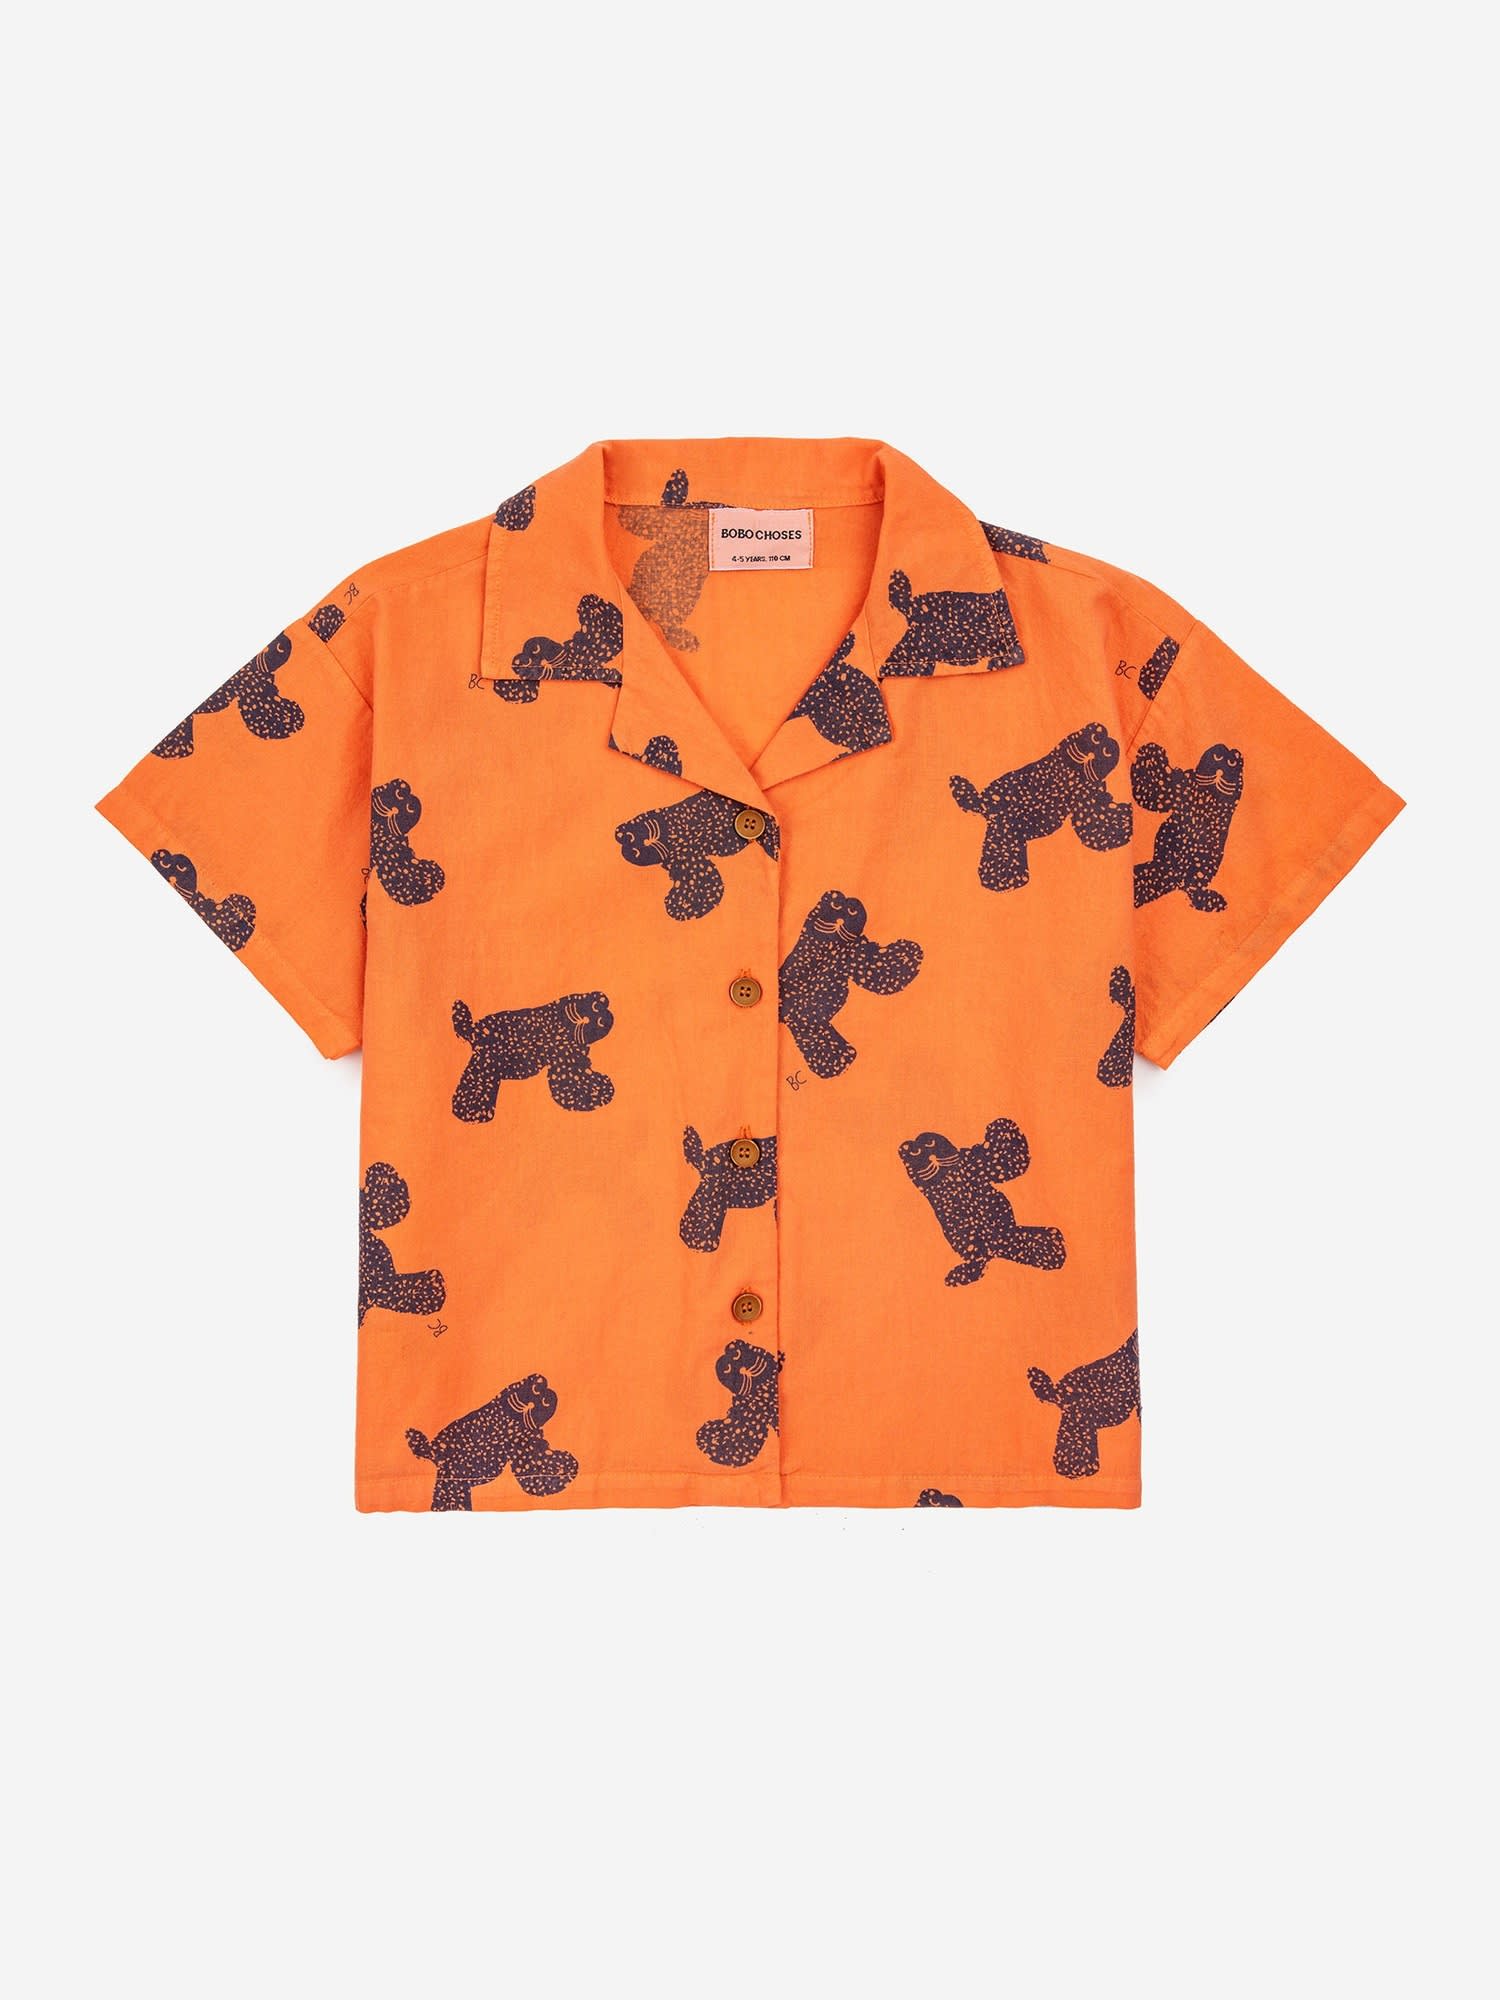 Shop Bobo Choses Orange Shirt For Kids With Chetaahs